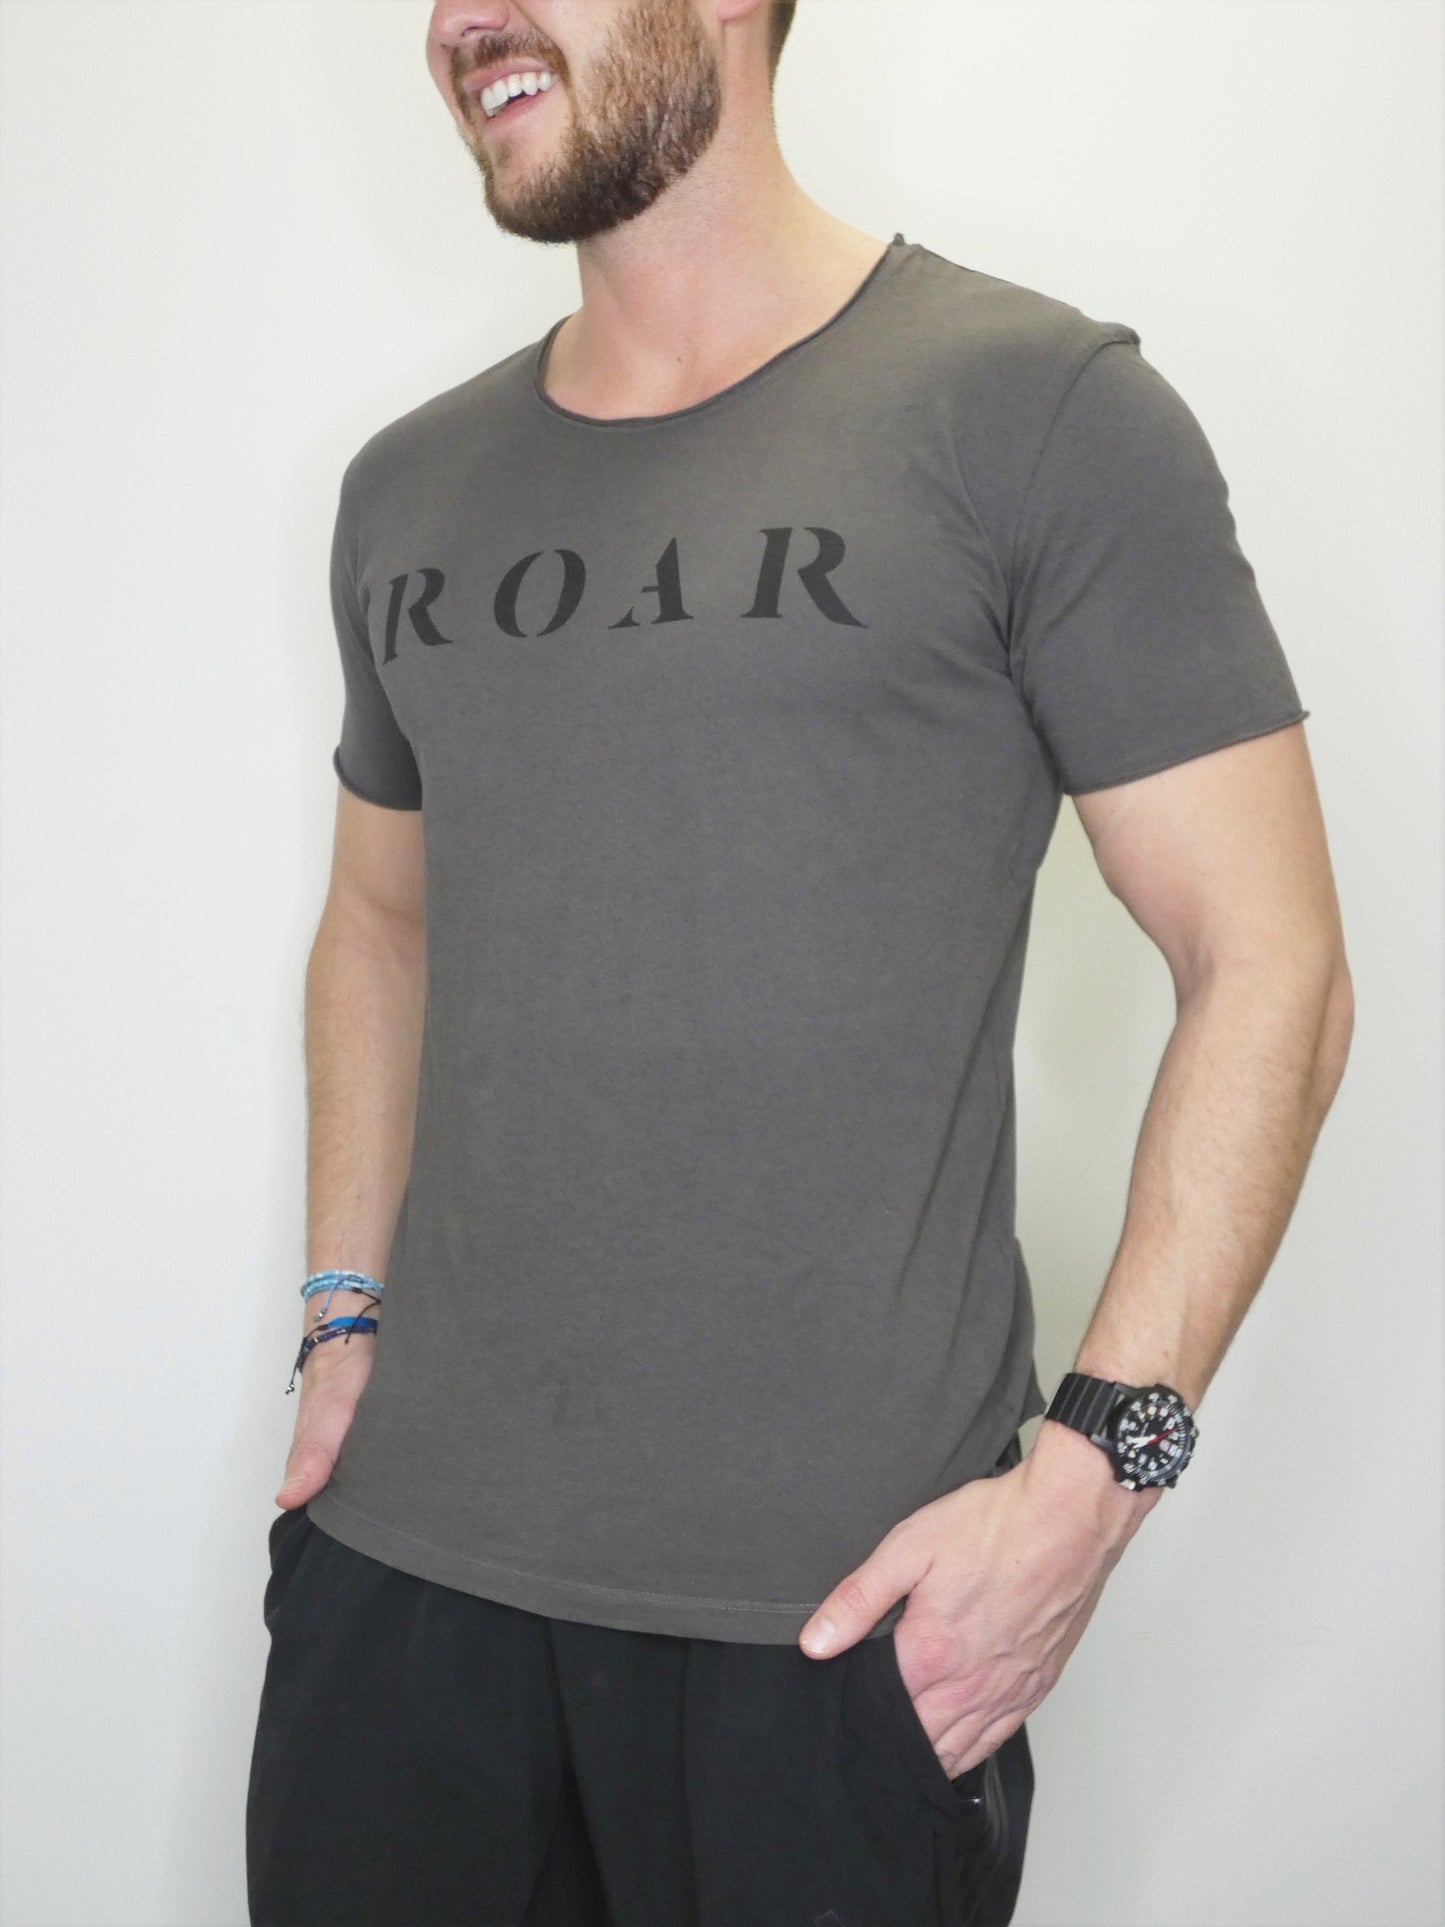 Roar t-shirt